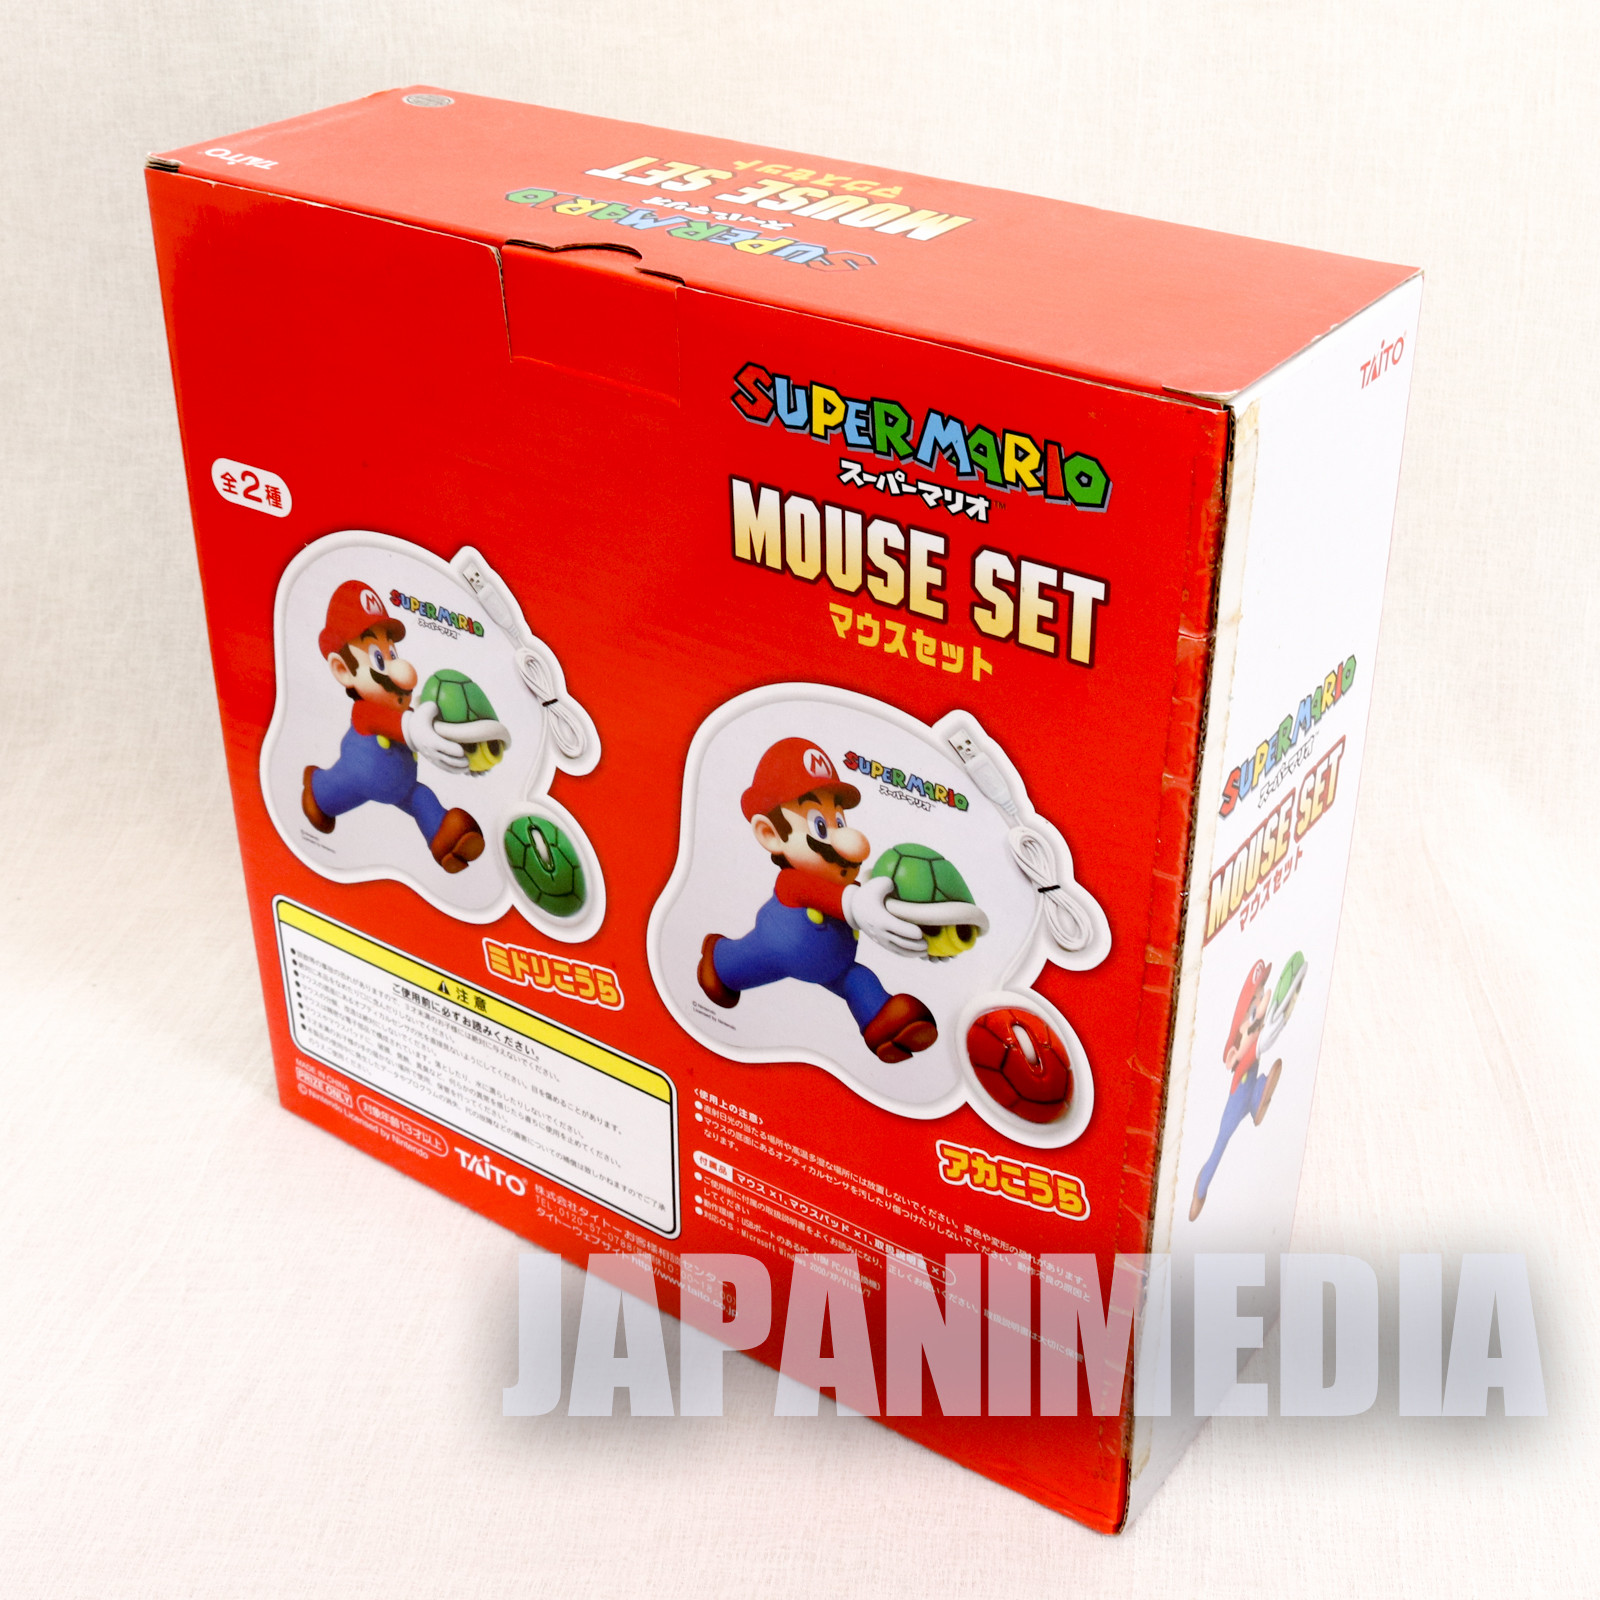 Super Mario Bros. Koopa Troopa USB Mouse & Mouse Pad JAPAN GAME NES FIGURE